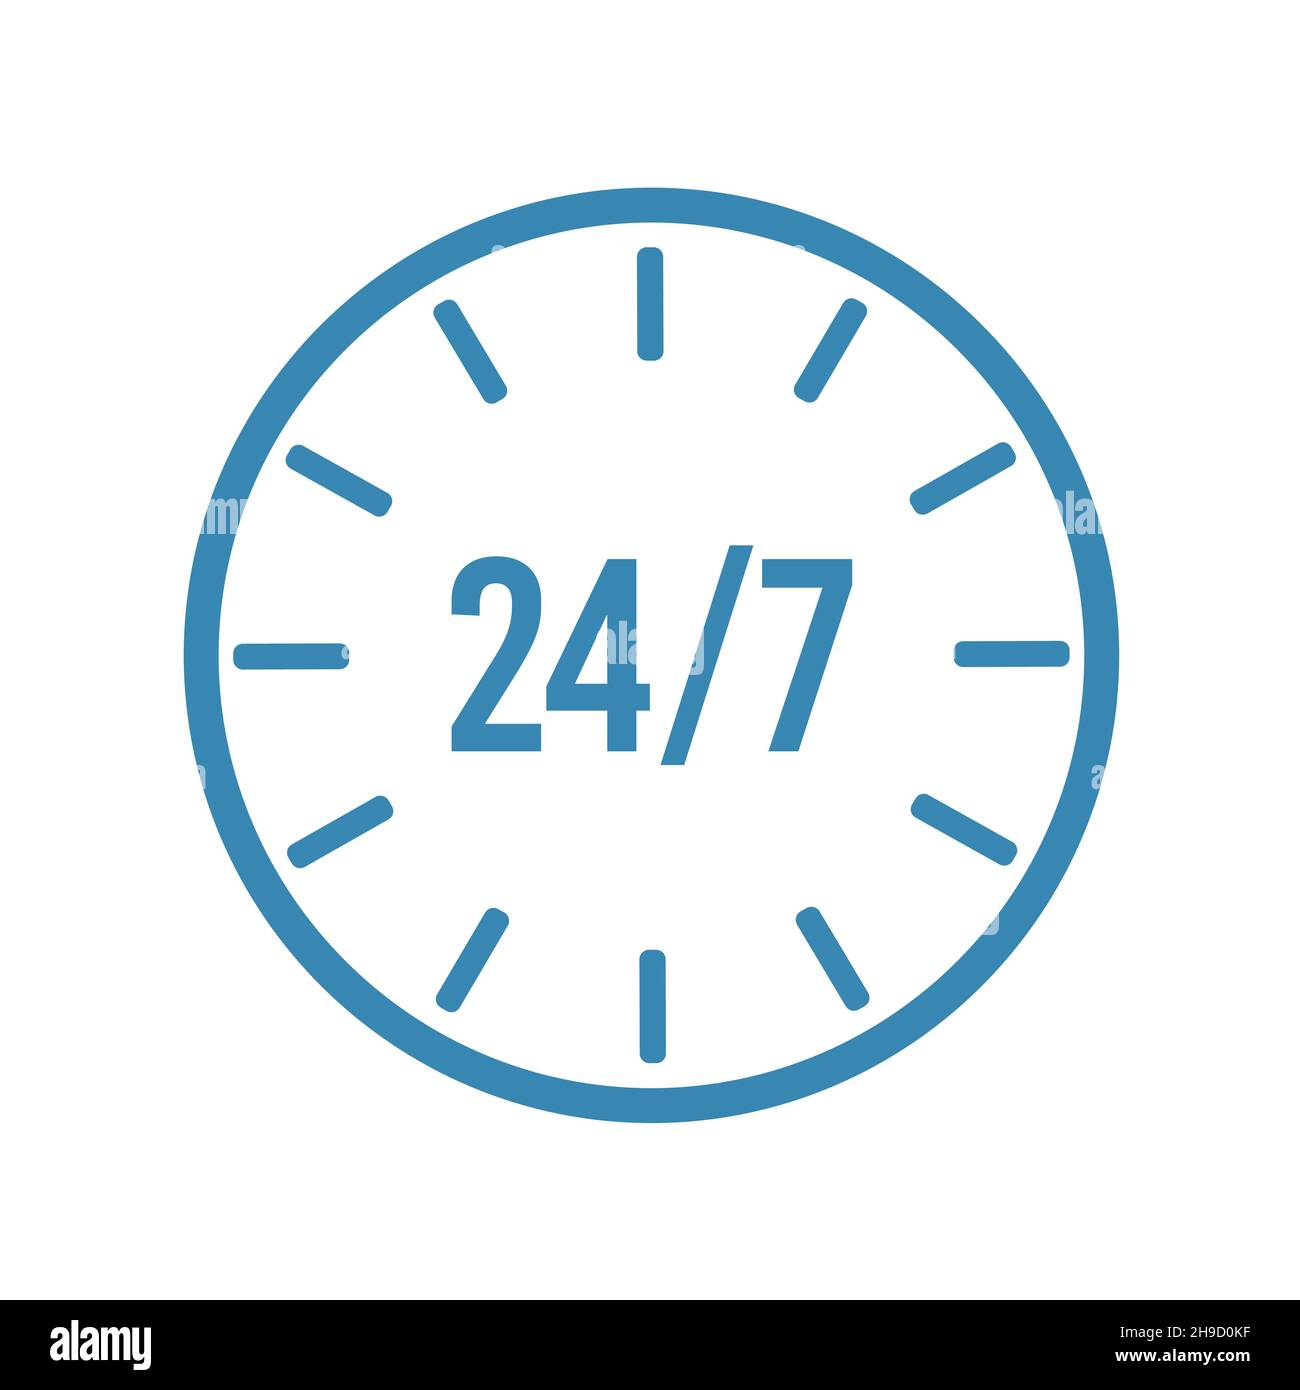 24 7 clock circle arrow for nonstop service icon. Non stop, twenty four hours support. 24 7 service open. Vector Stock Vector